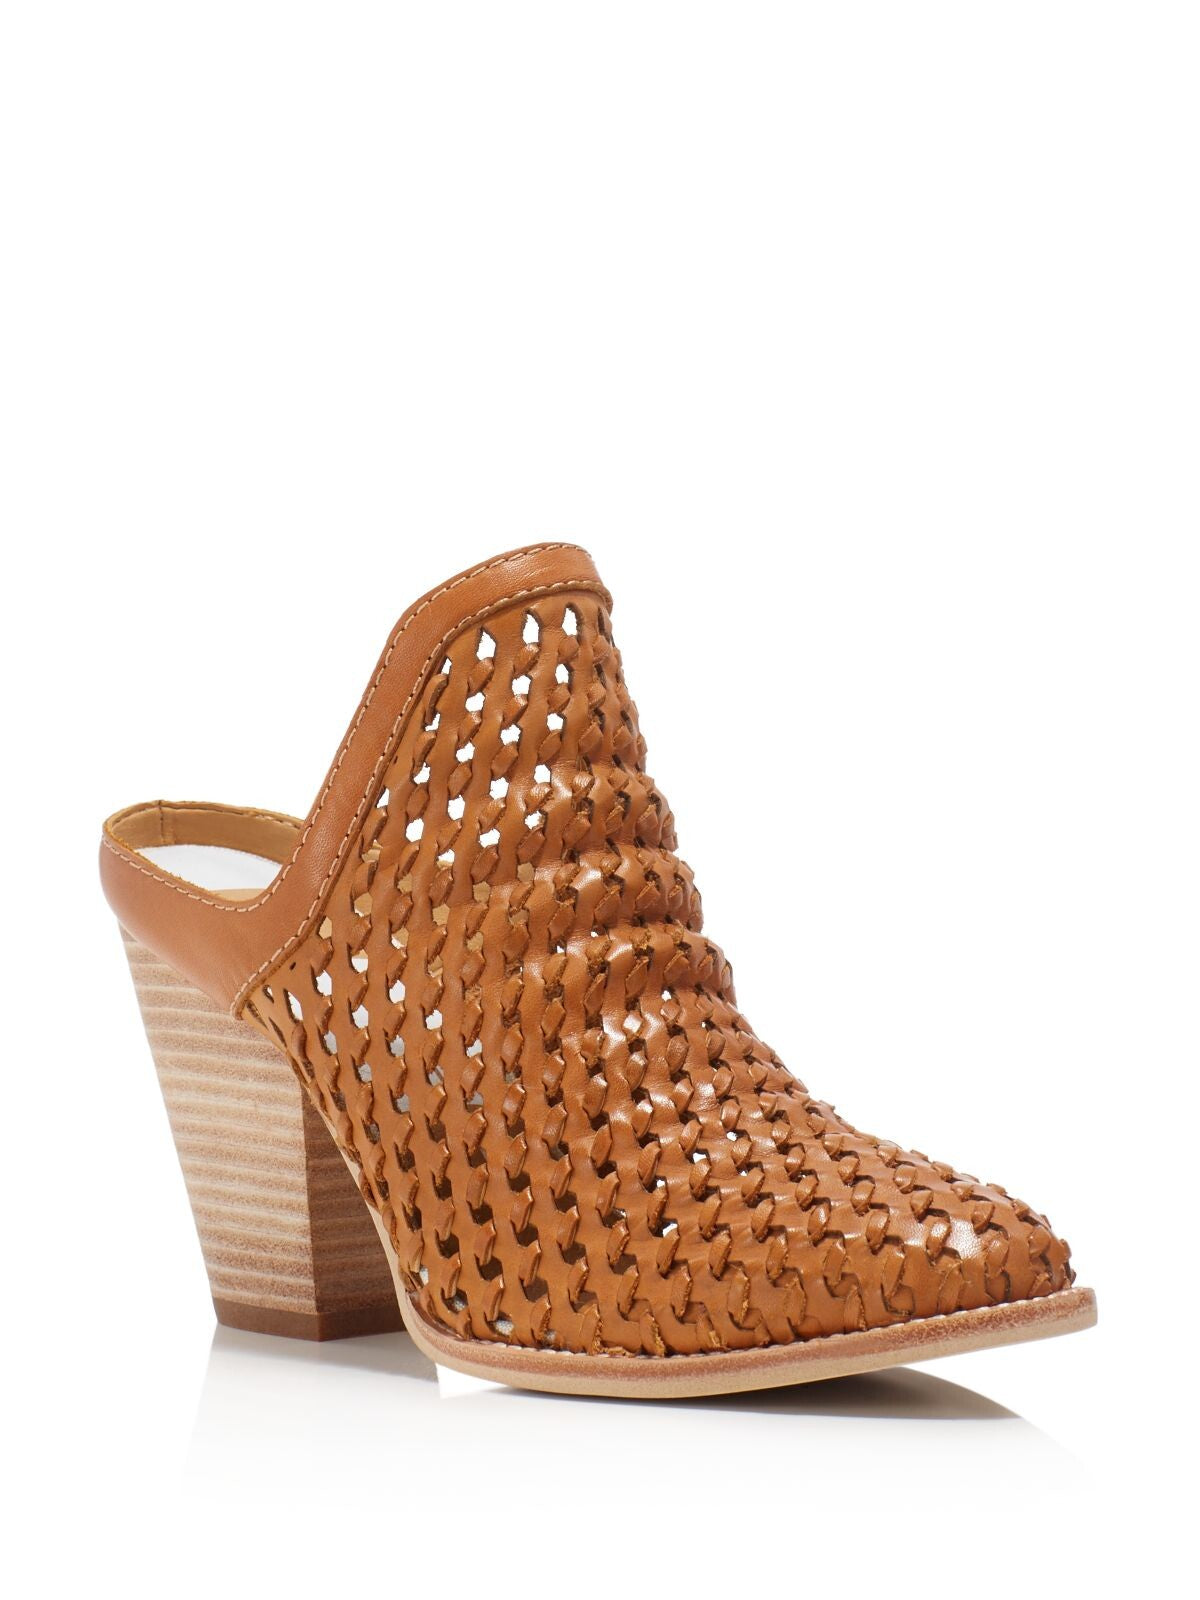 DOLCE VITA Womens Beige Woven Comfort Hudson Round Toe Block Heel Slip On Leather Heeled Mules Shoes 7